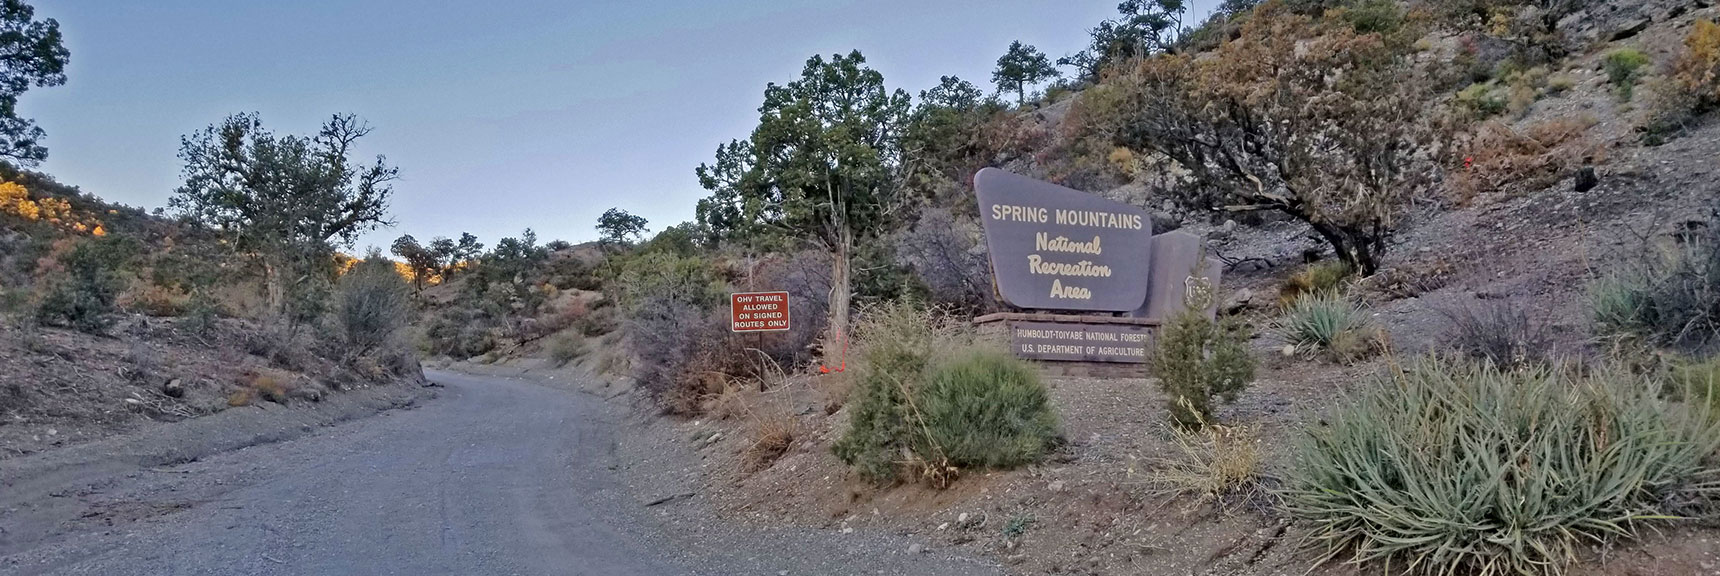 Entering Spring Mountains National Rec Area on Potosi Canyon Road. Note OHV Sign. | Potosi Mountain Northern Cliffs Trail | Spring Mountains, Nevada